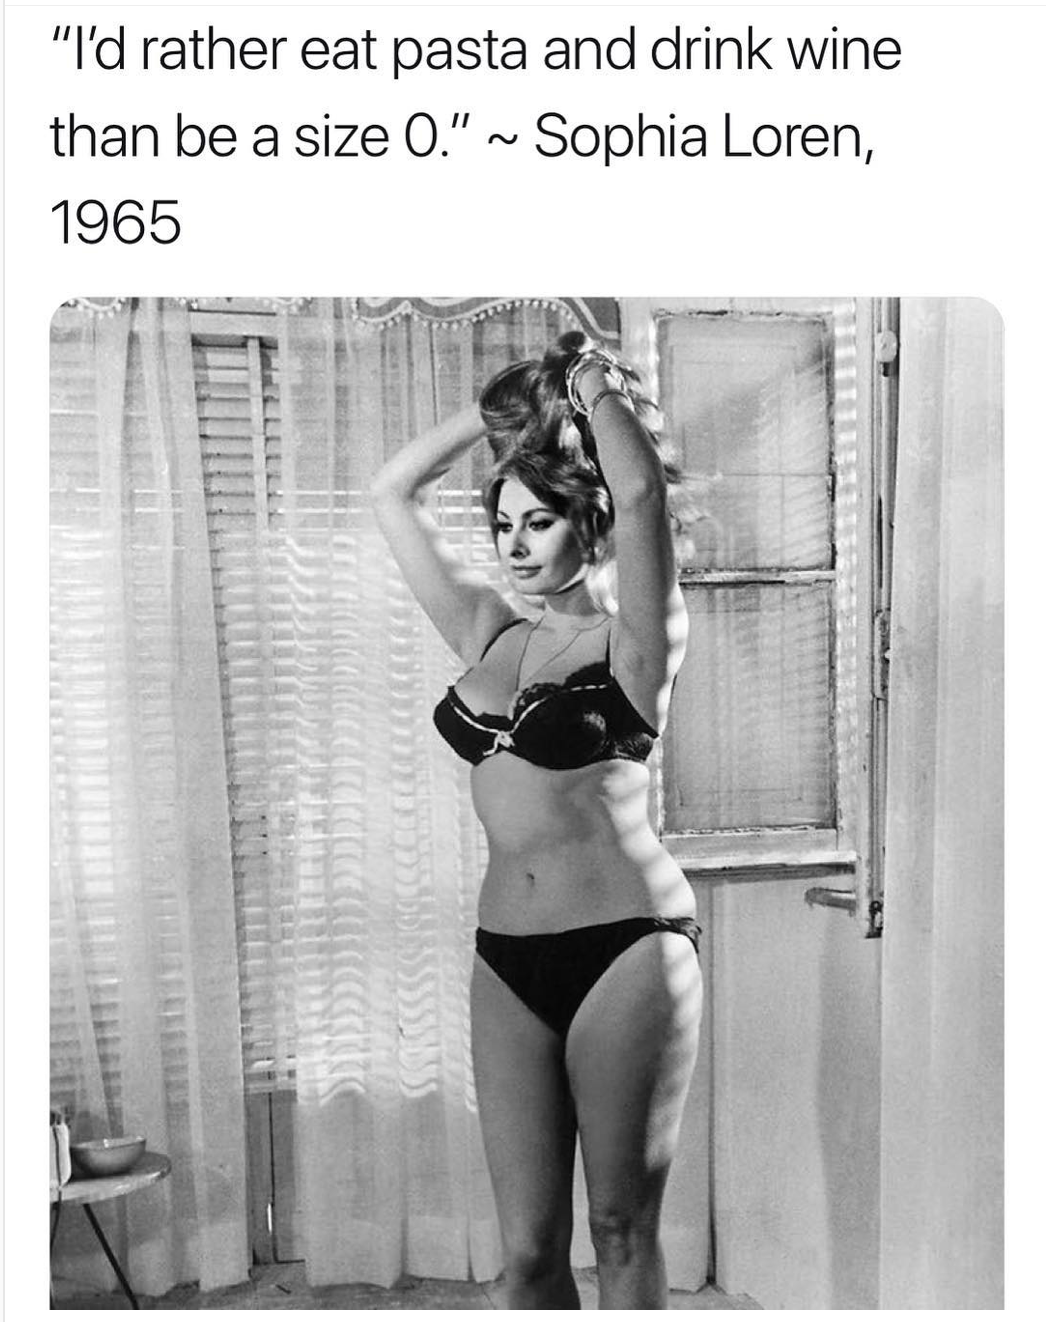 memes - sophia loren pasta and wine - "I'd rather eat pasta and drink wine than be a size 0." ~ Sophia Loren, 1965